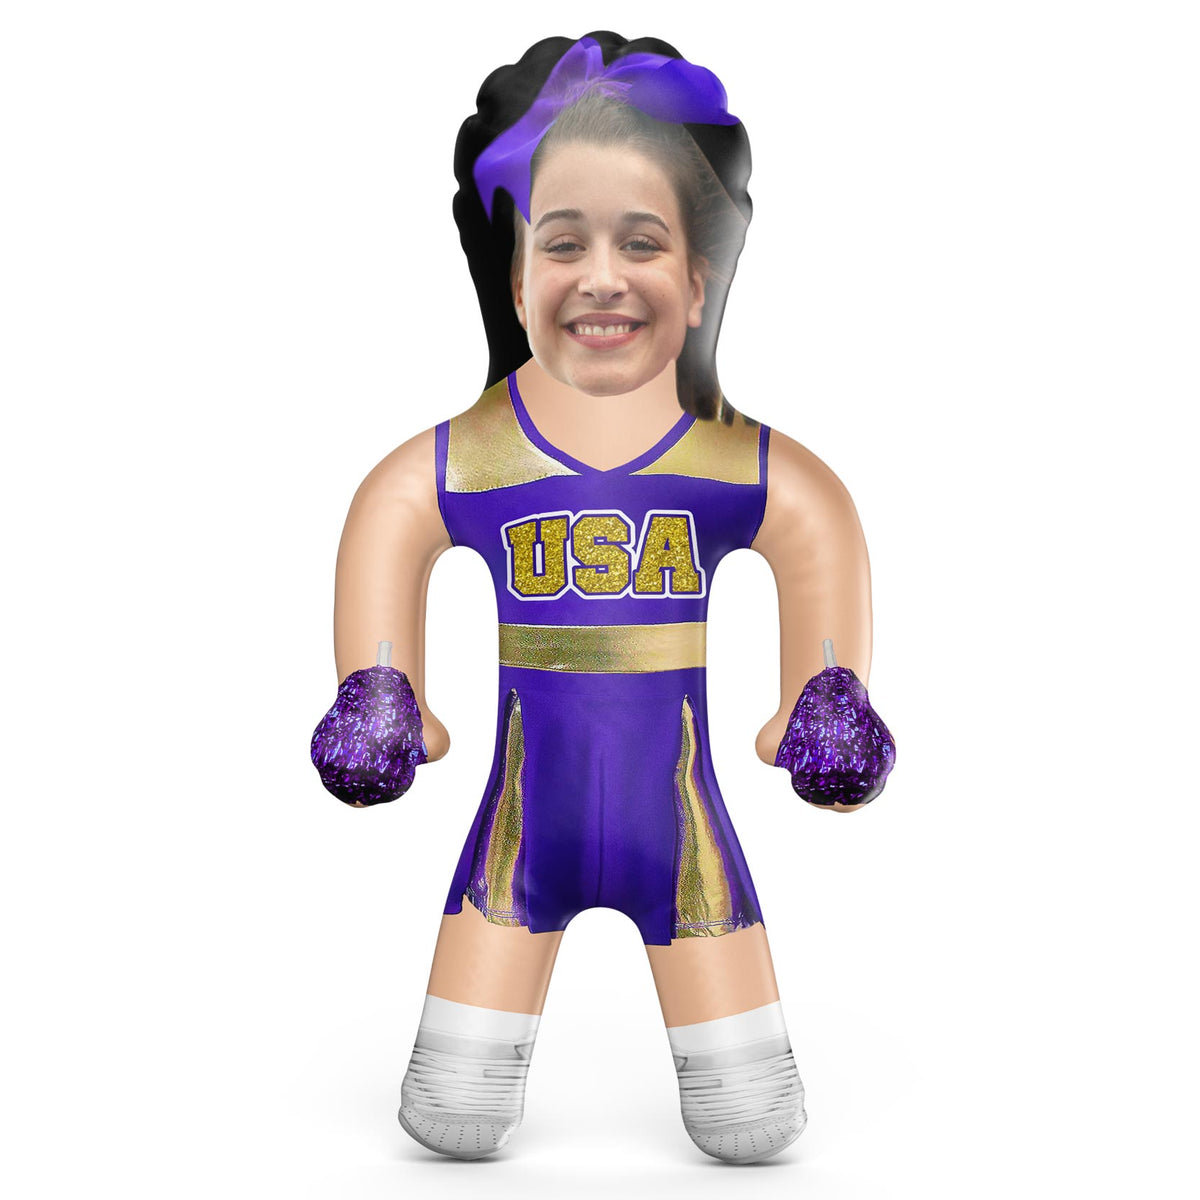 USA Cheerleader Purple